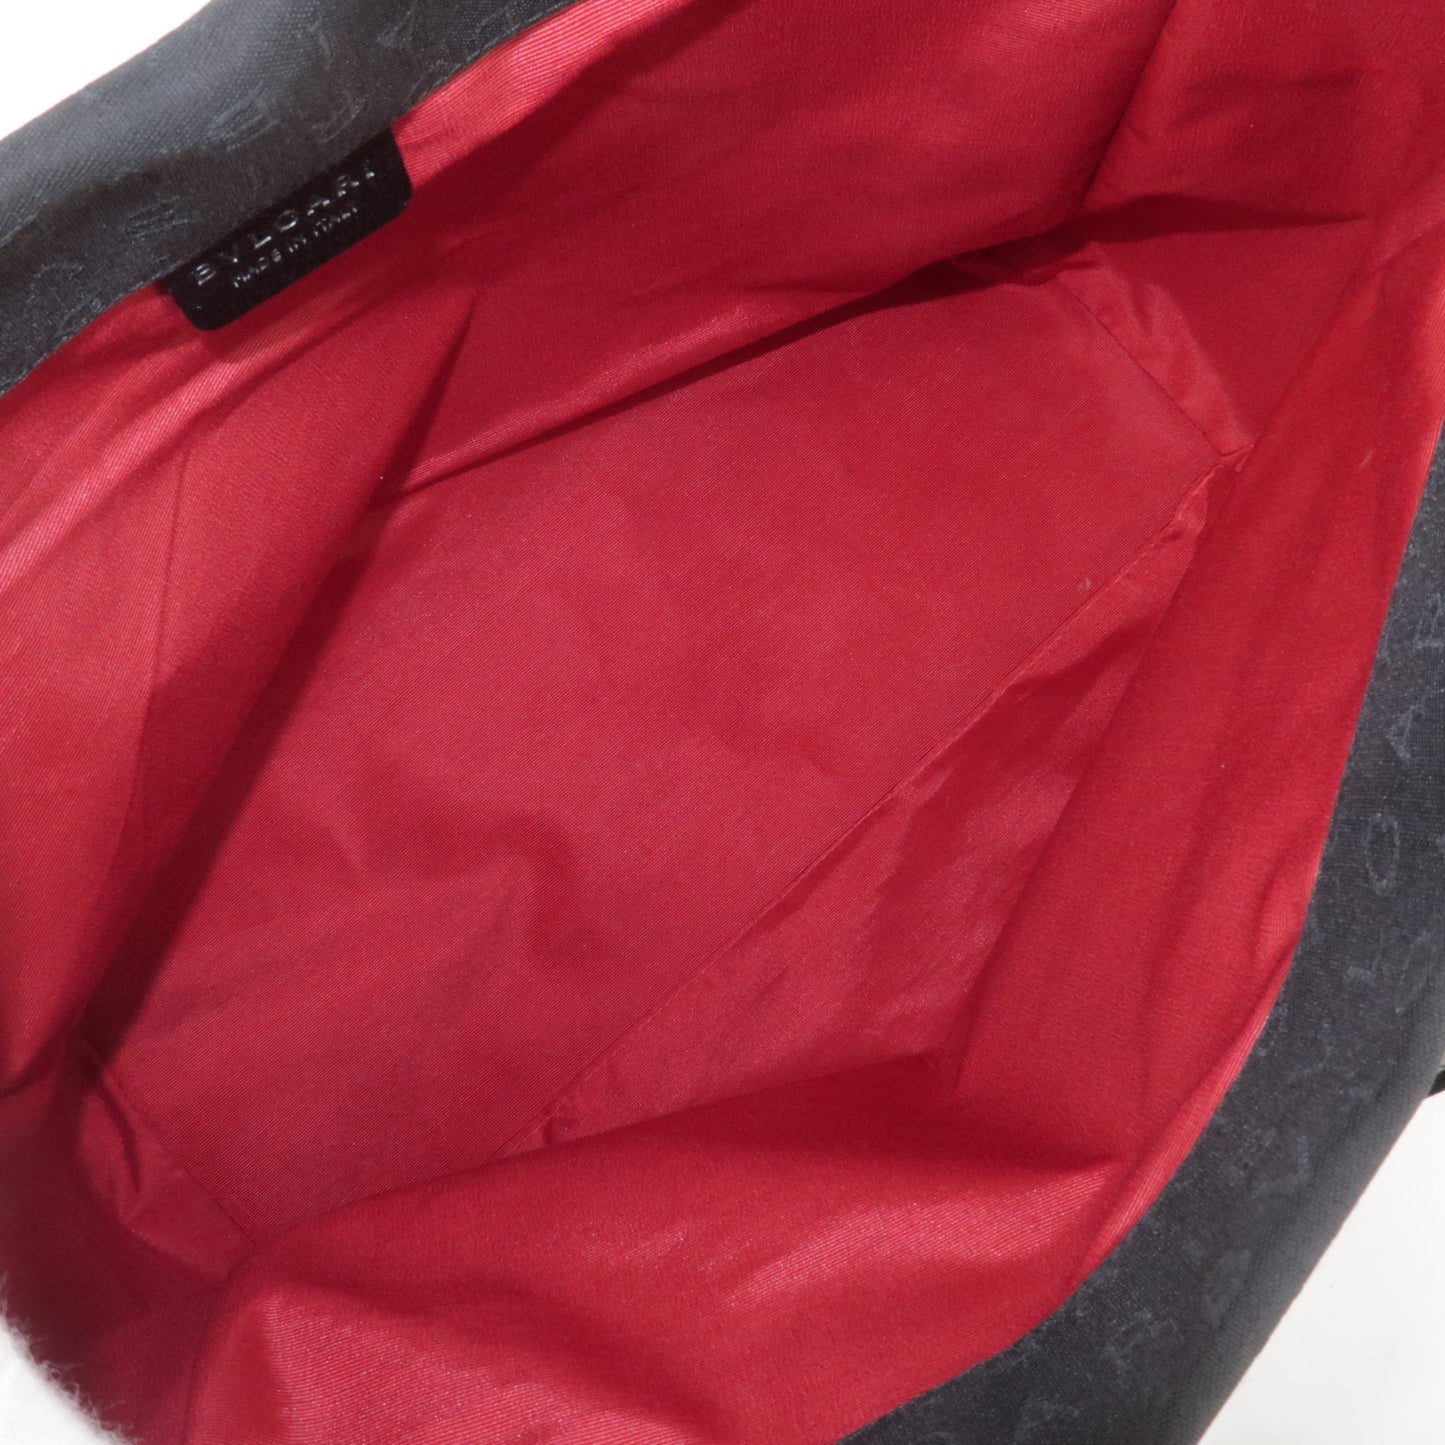 BVLGARI Logo Mania Canvas Leather Tote Bag Shoulder Bag Black